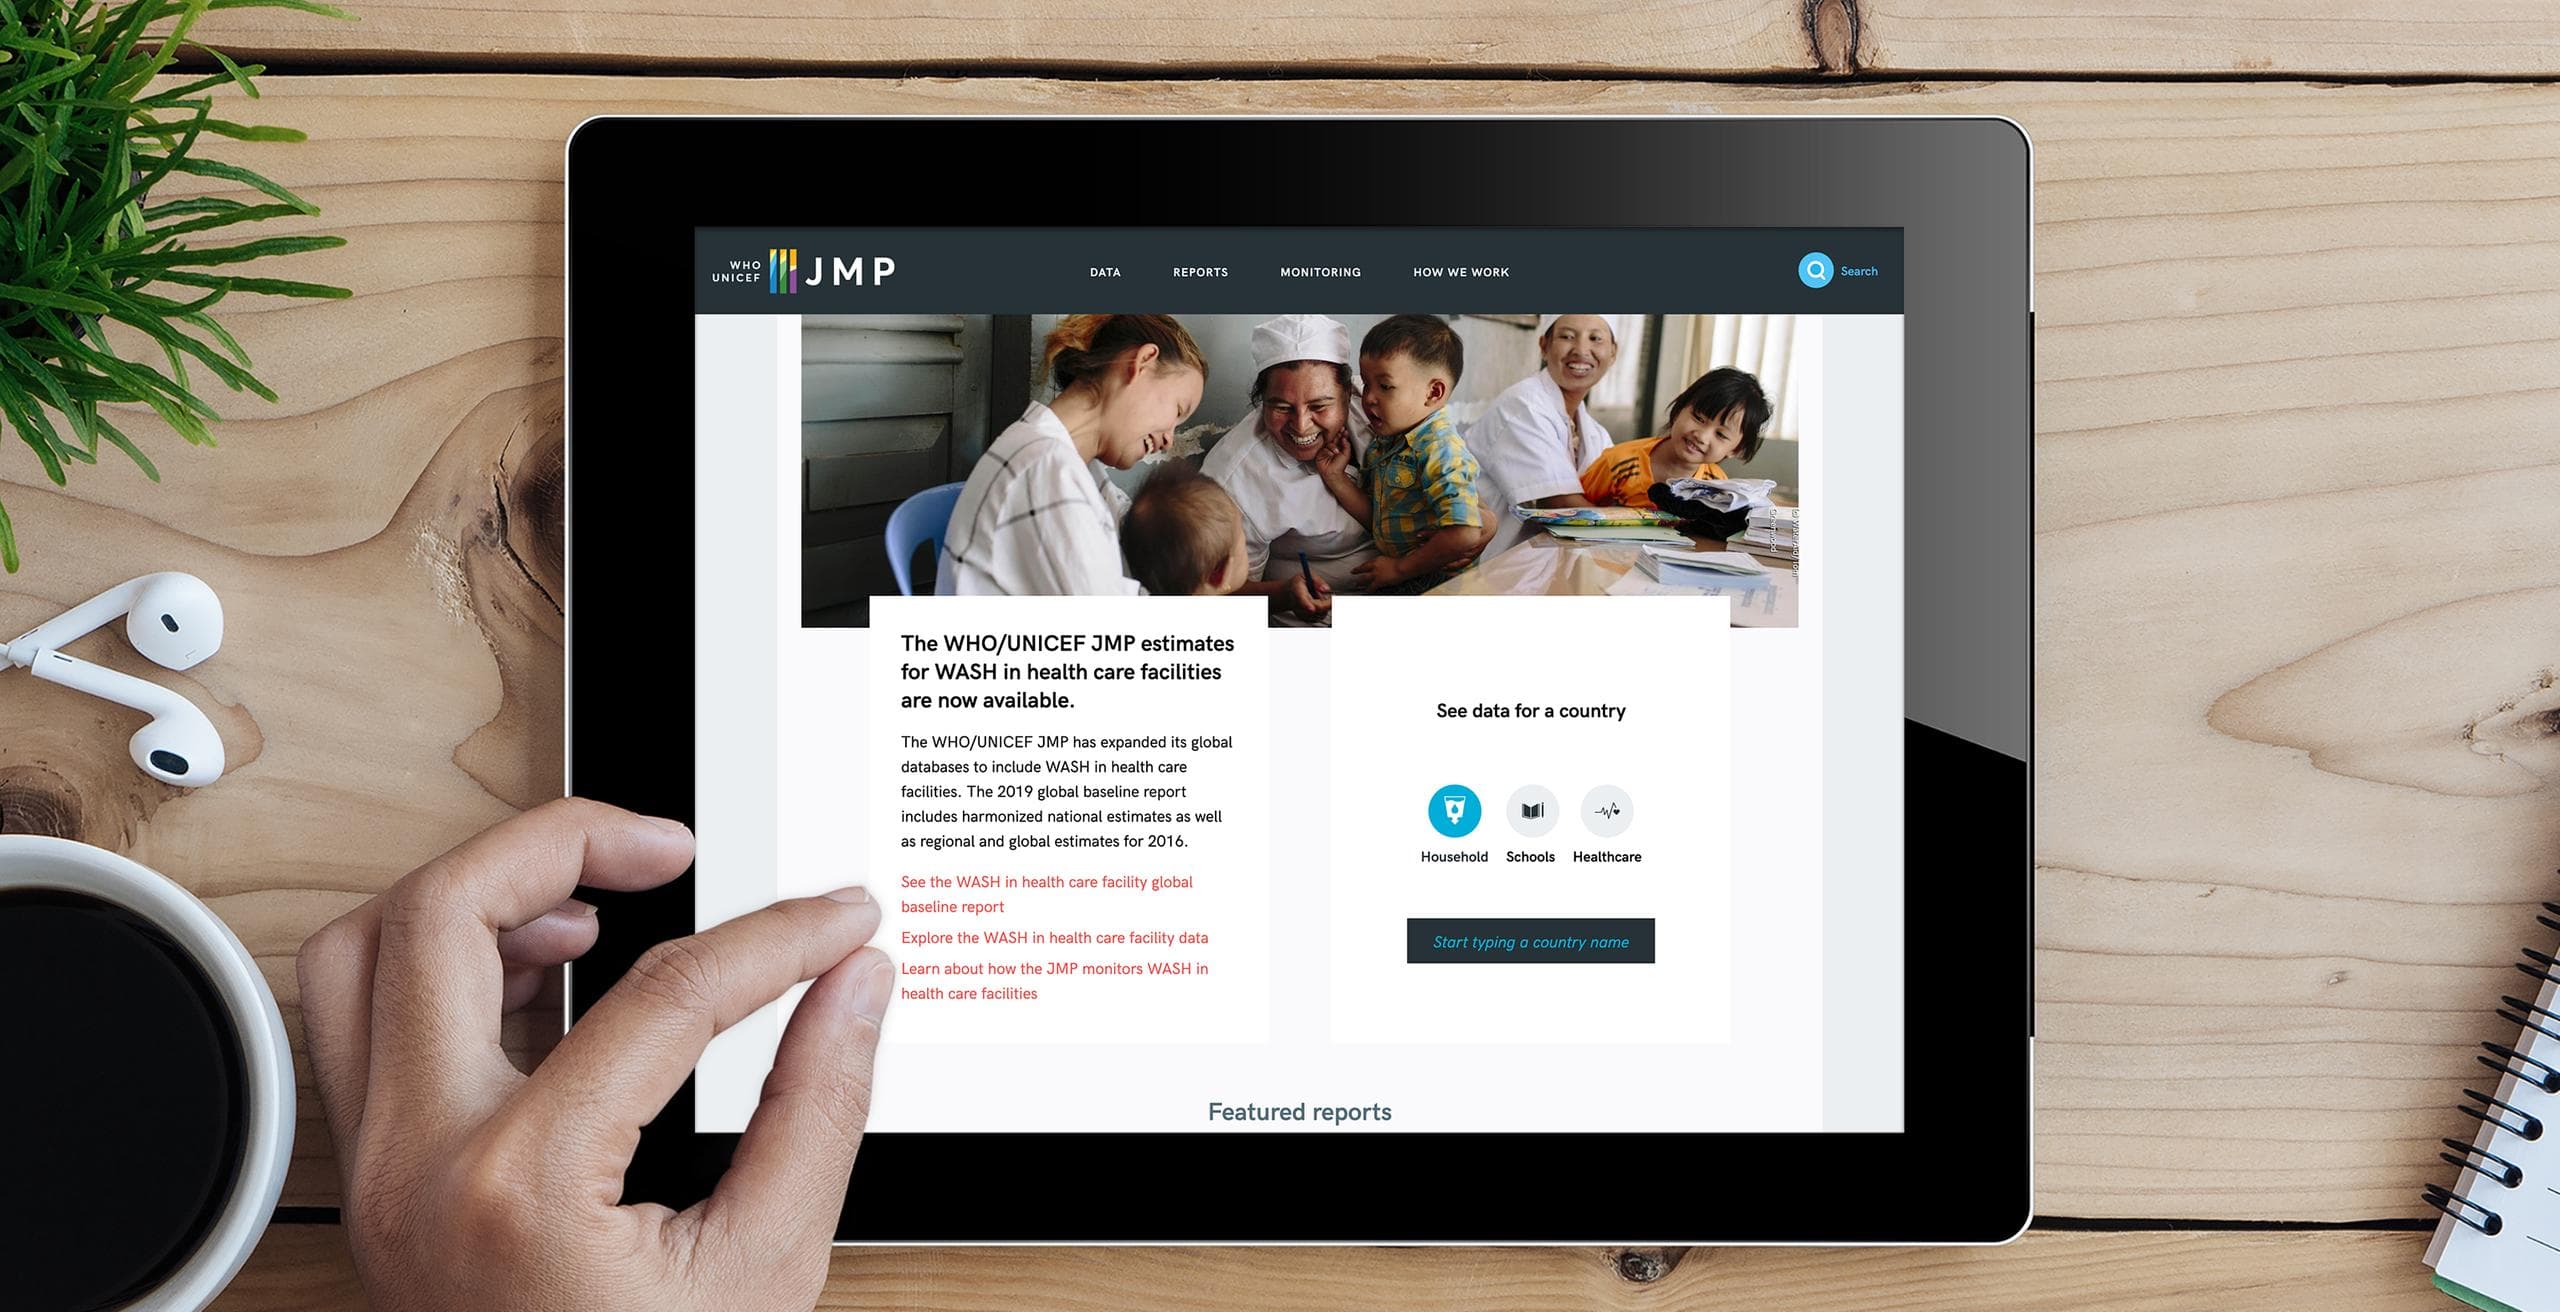 Image of ipad on table displaying the JMP homepage